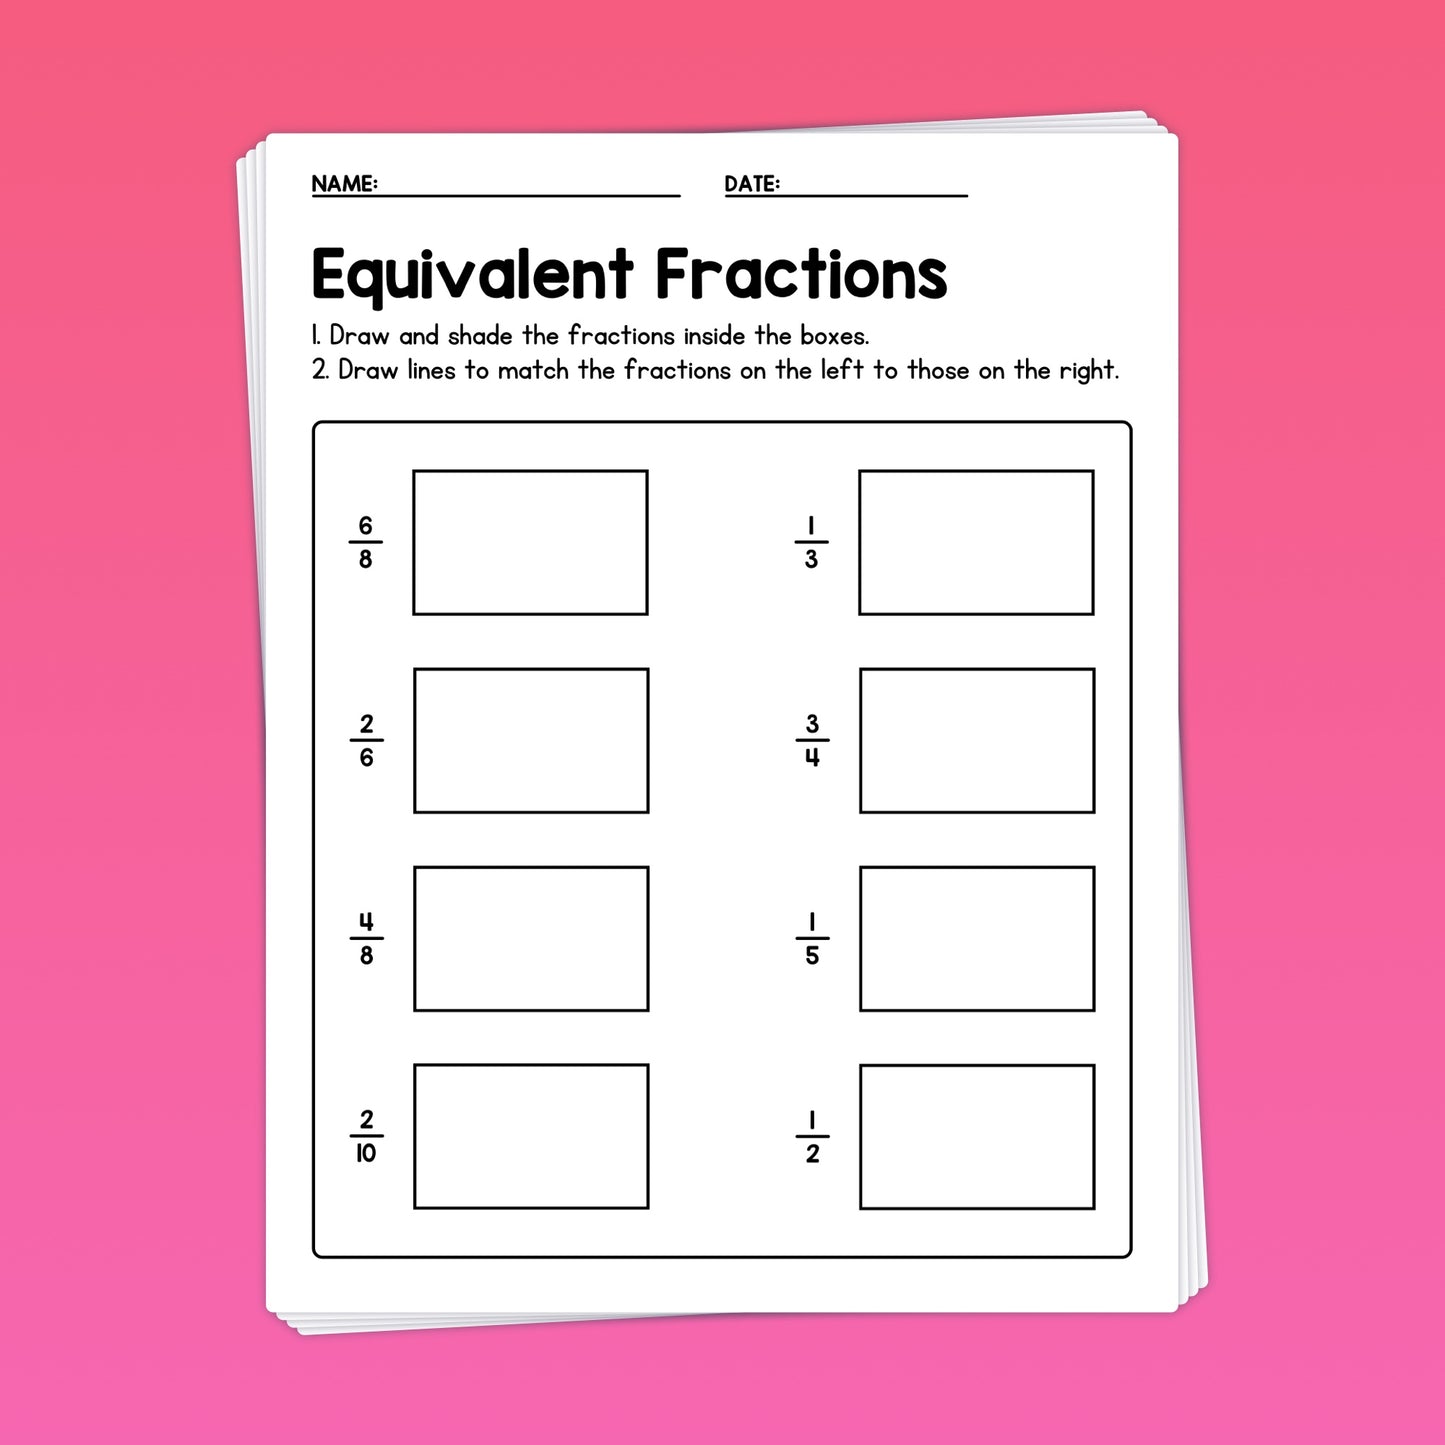 Practice equivalent fractions